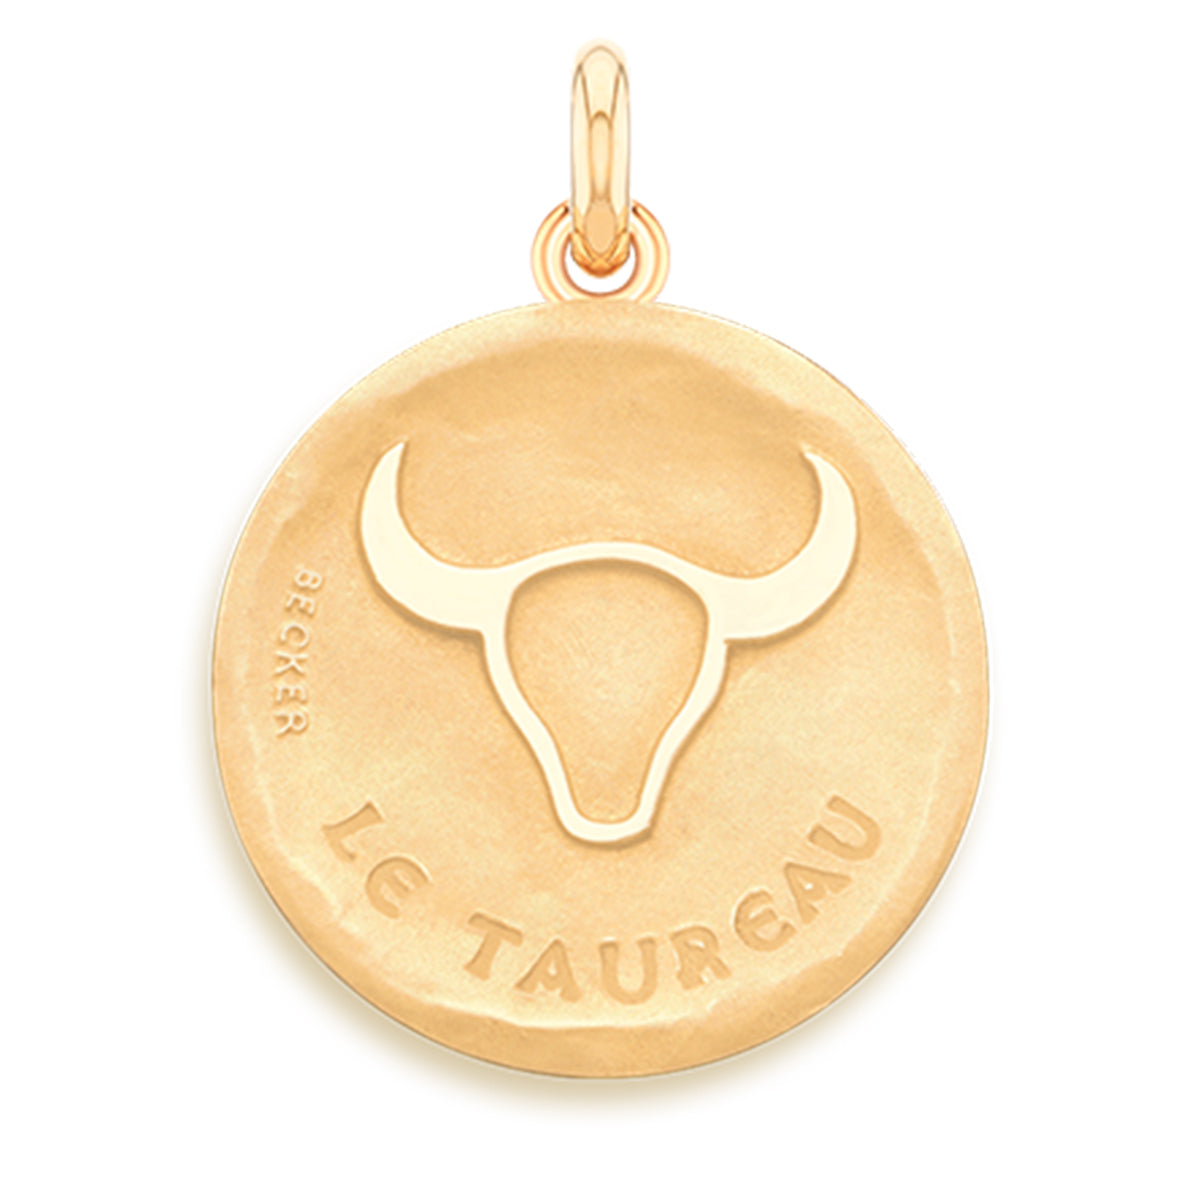 Taurus/LeTaureau 18k Symbol Medallion Charm